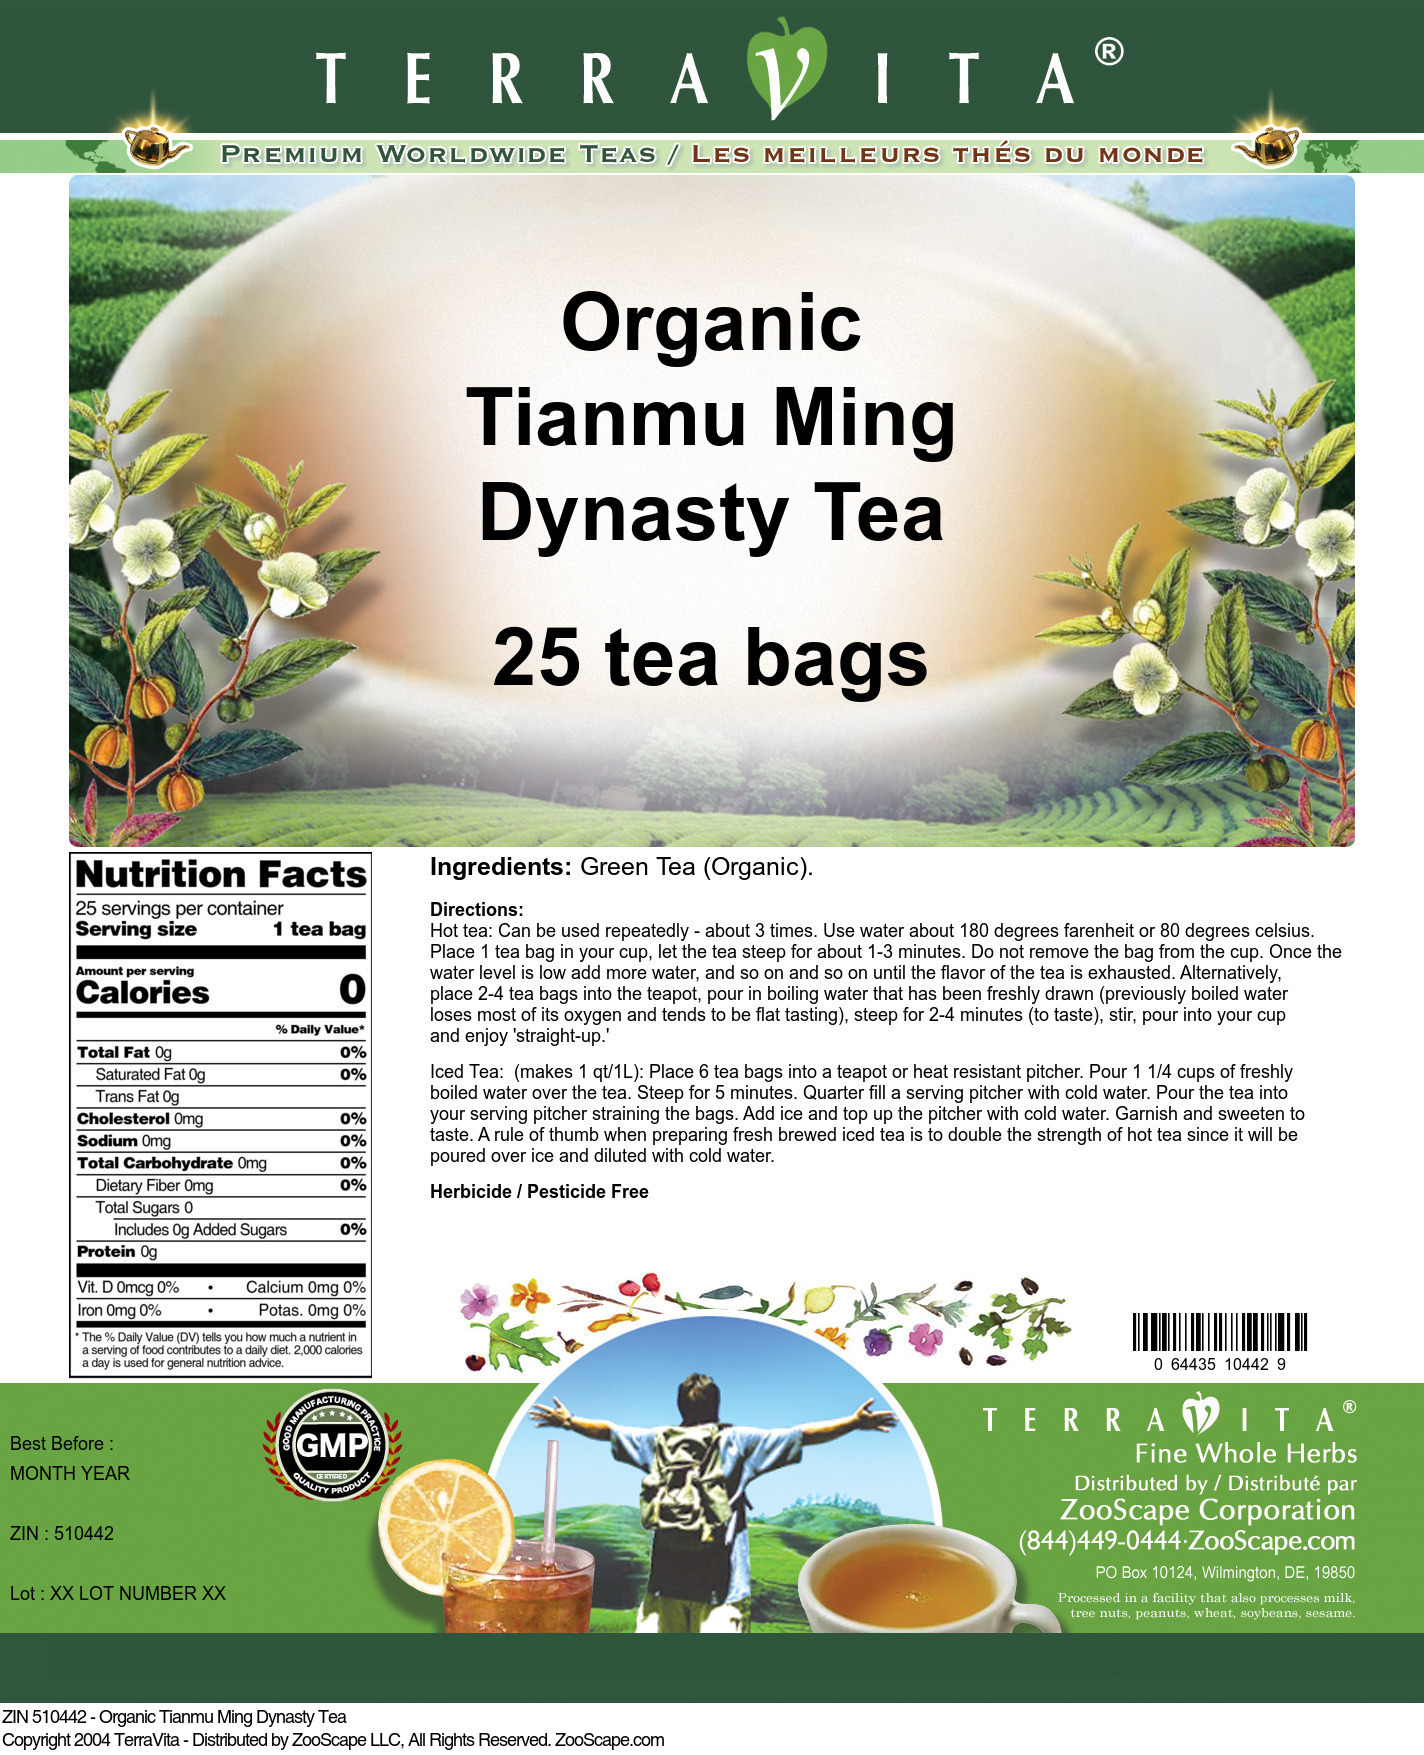 Organic Tianmu Ming Dynasty Tea - Label